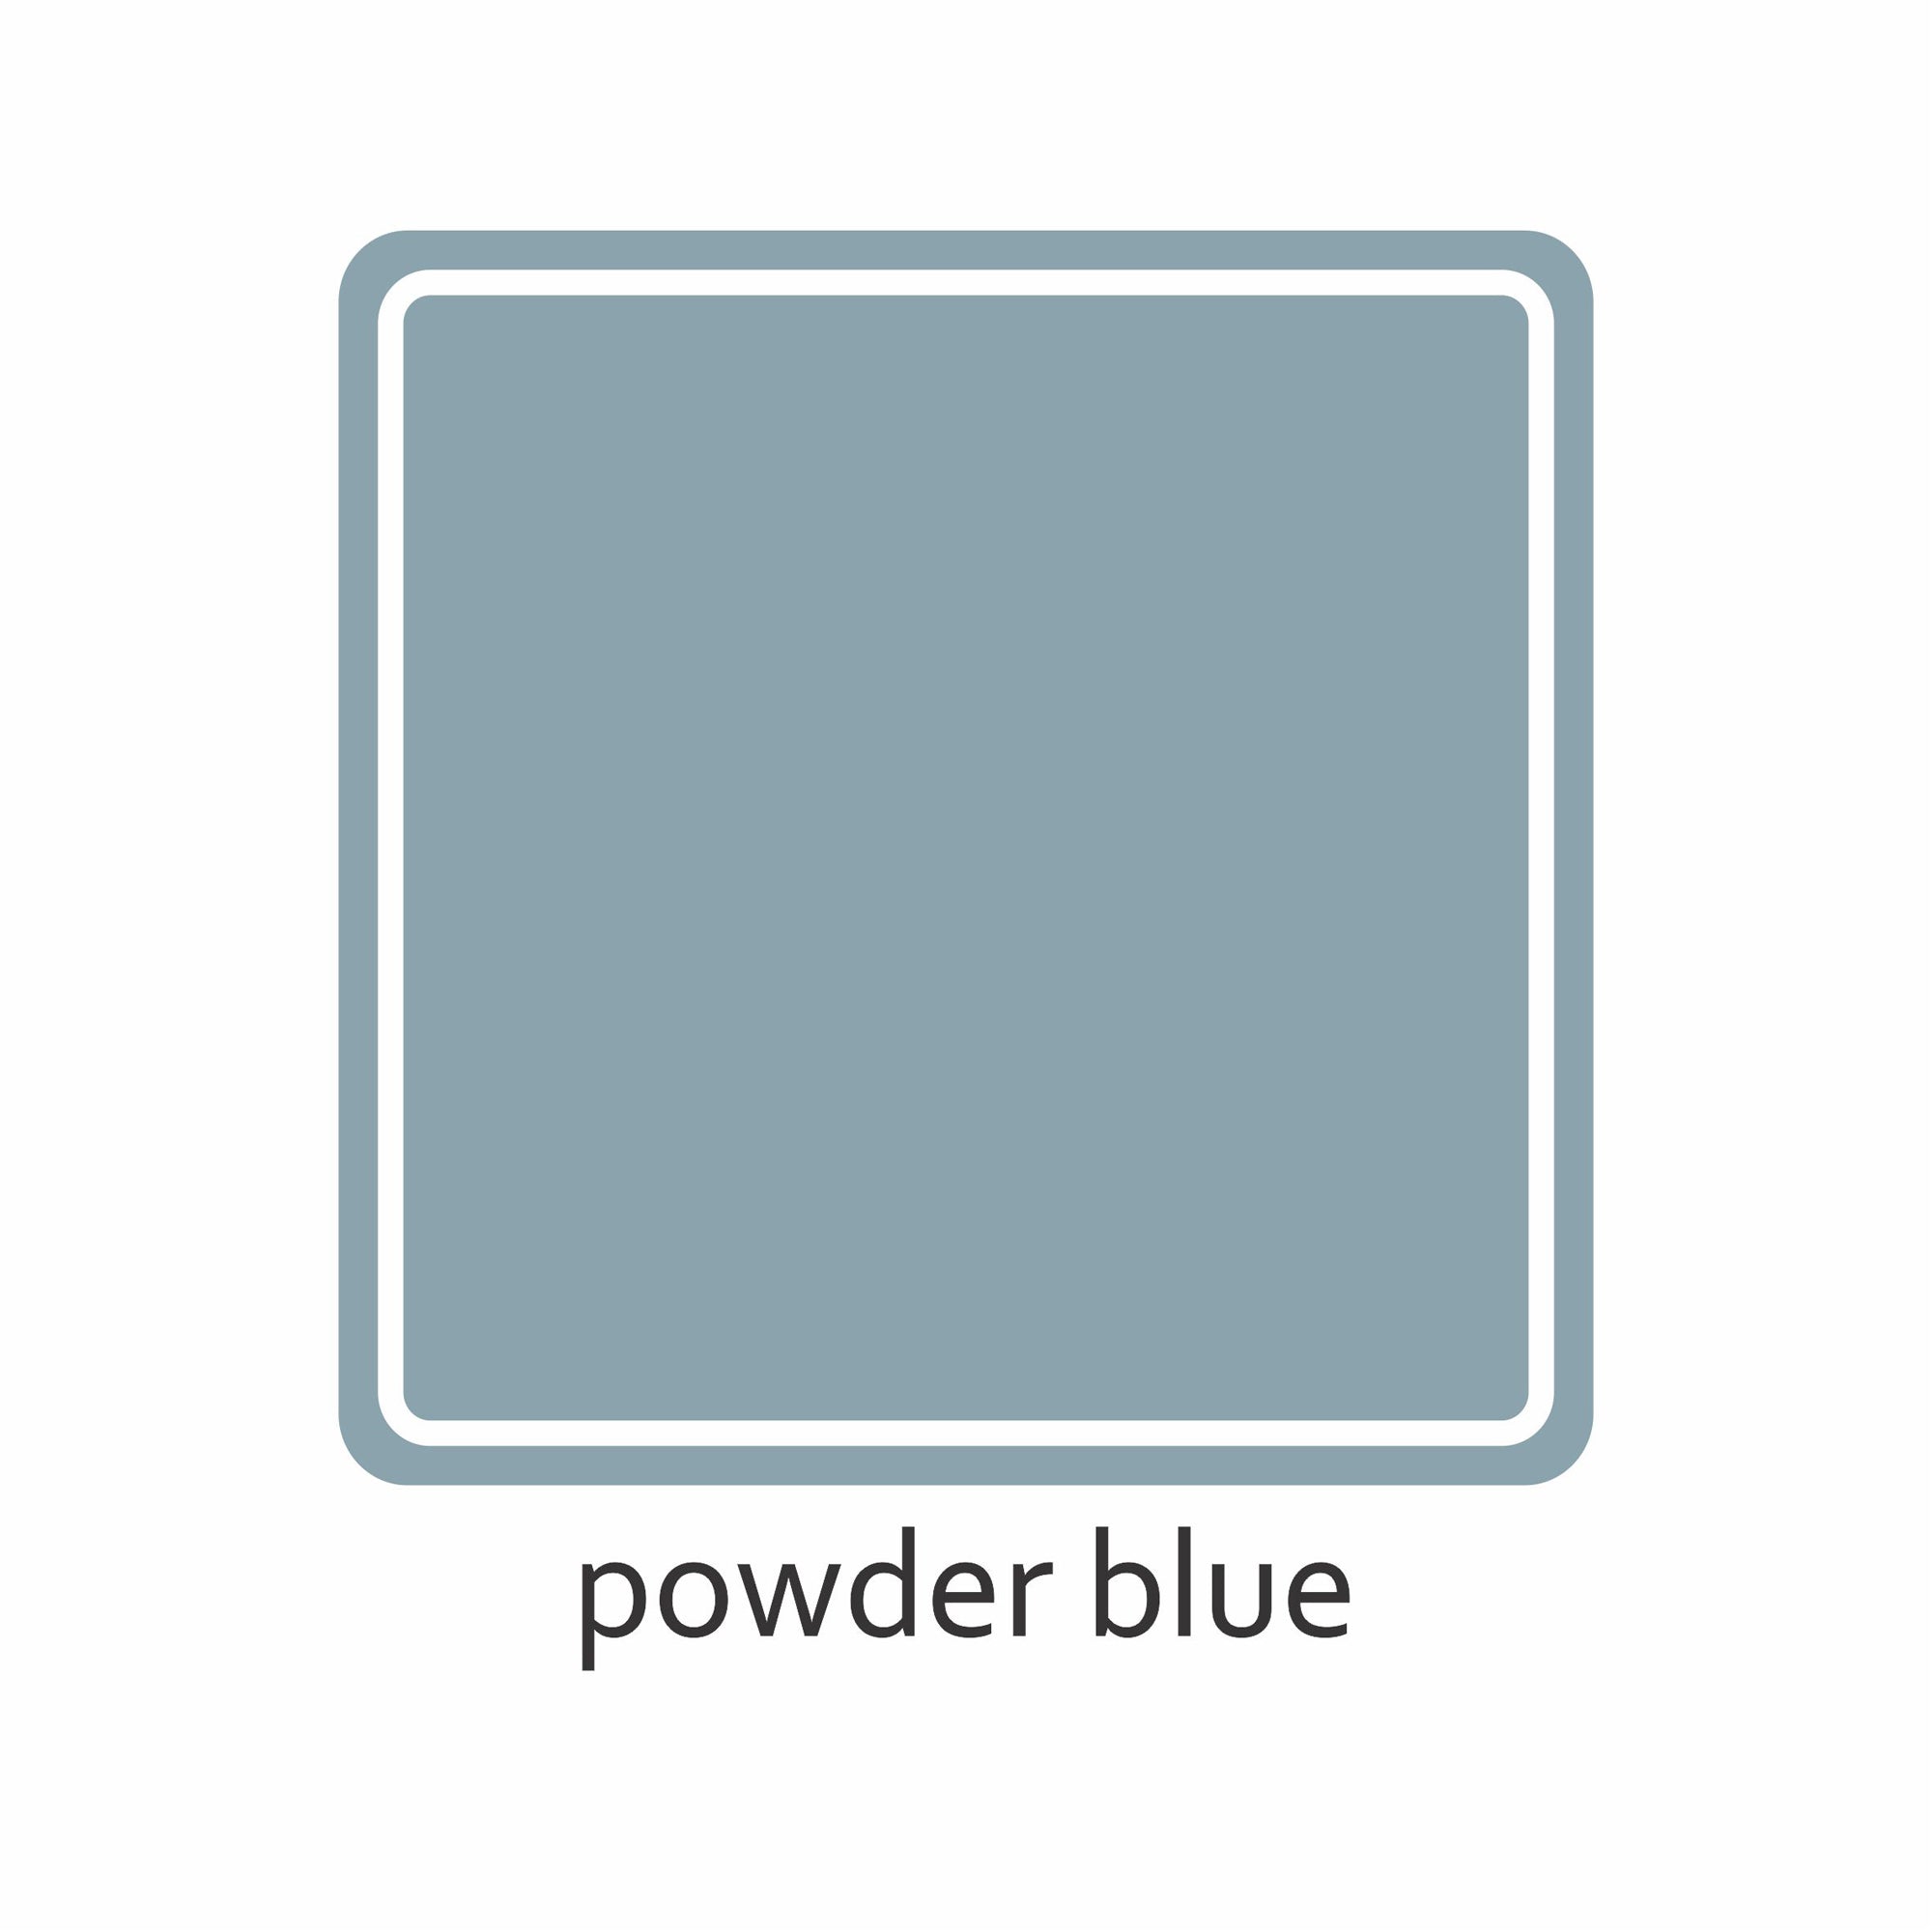 PROMO! Solid Color in Powder Blue Vinyl Tile Sticker - 8 pcs pack in 30 cm